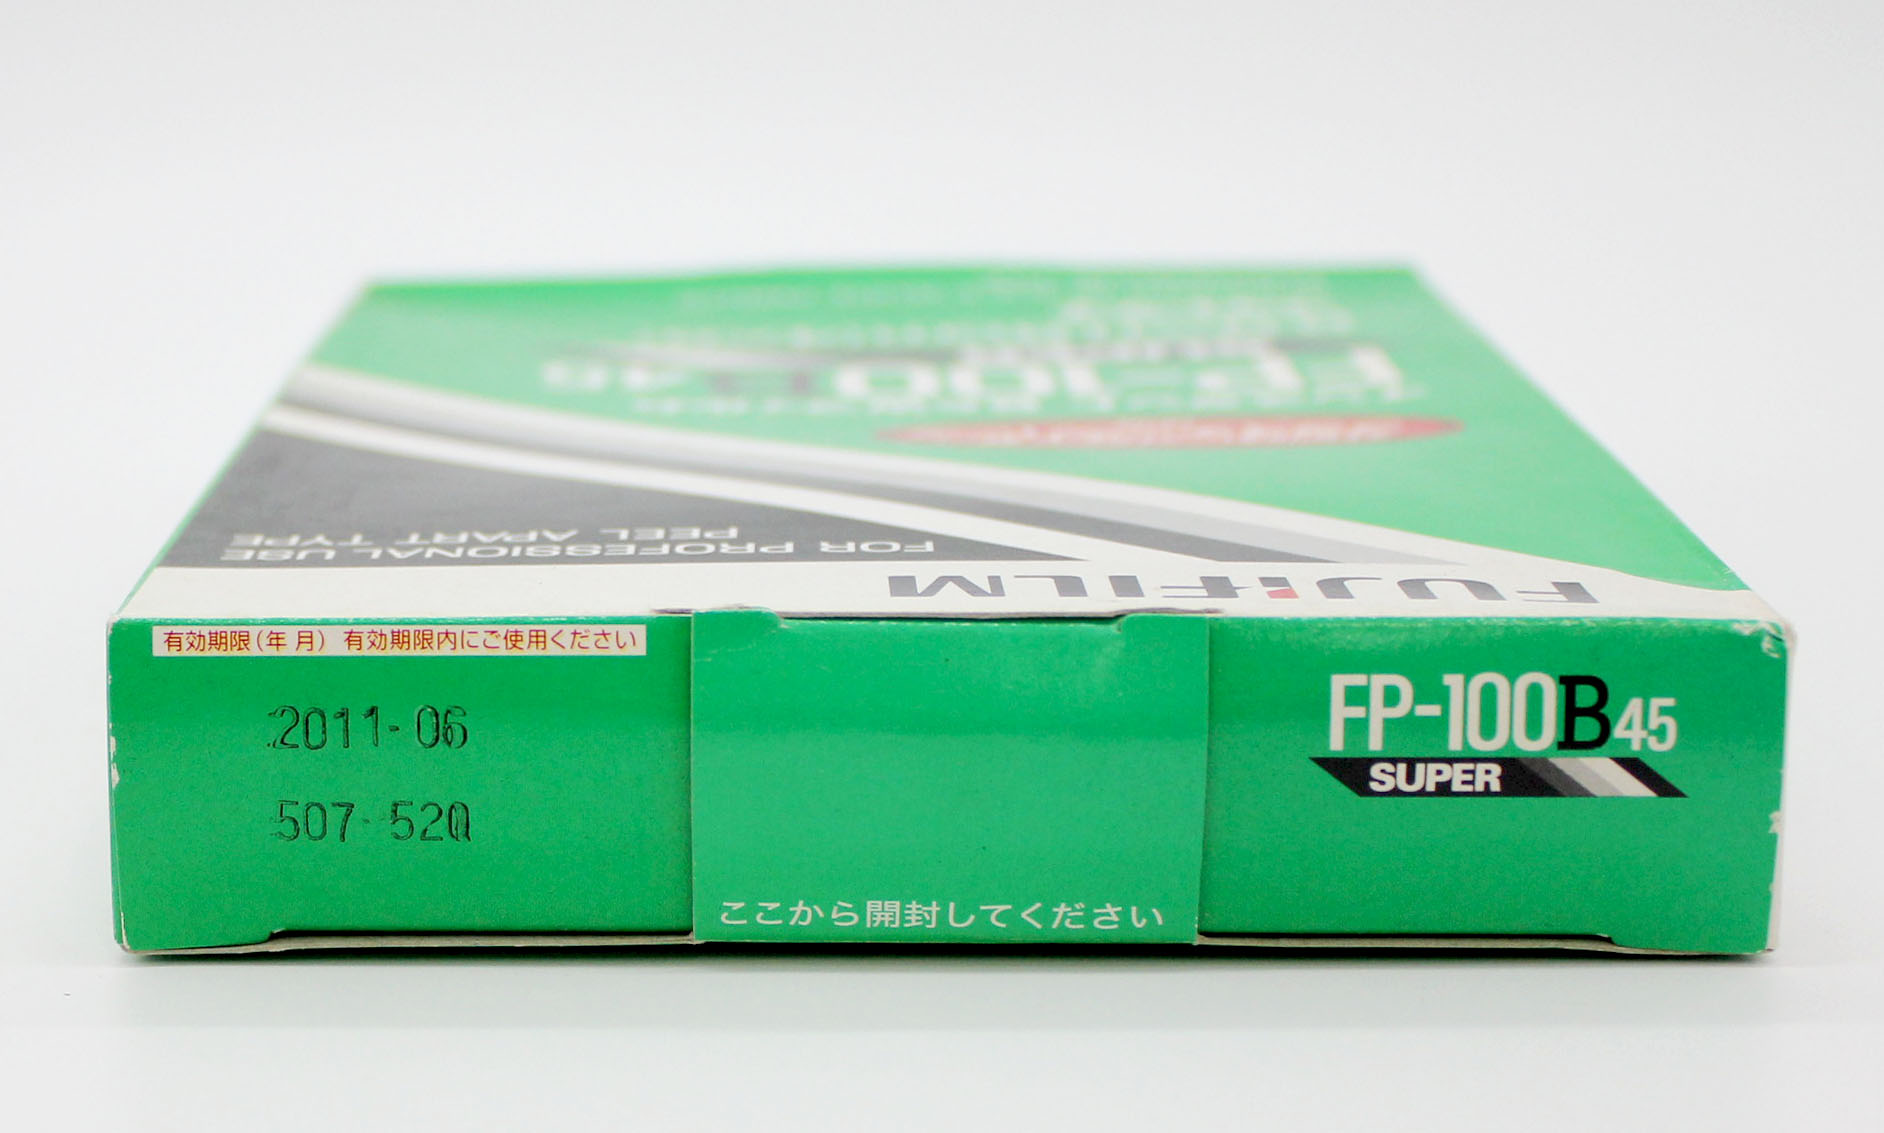  Fuji Fujifilm FP-100B45 4x5 8.9x11.8cm Instant Black & White Film (EXP 6/2011) Photo 2